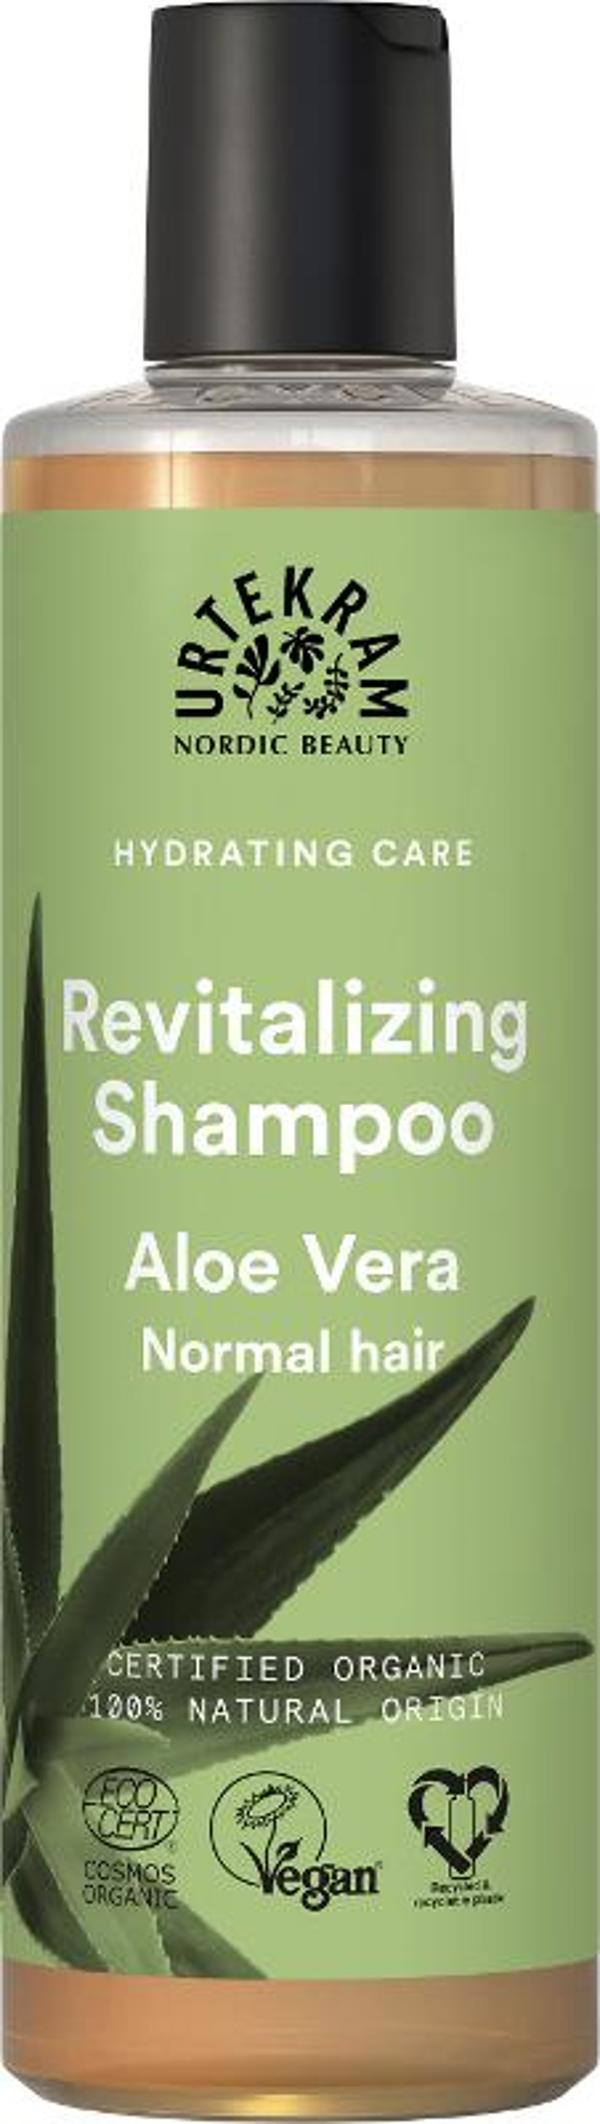 Produktfoto zu Aloe Vera Shampoo normales Haar 250g